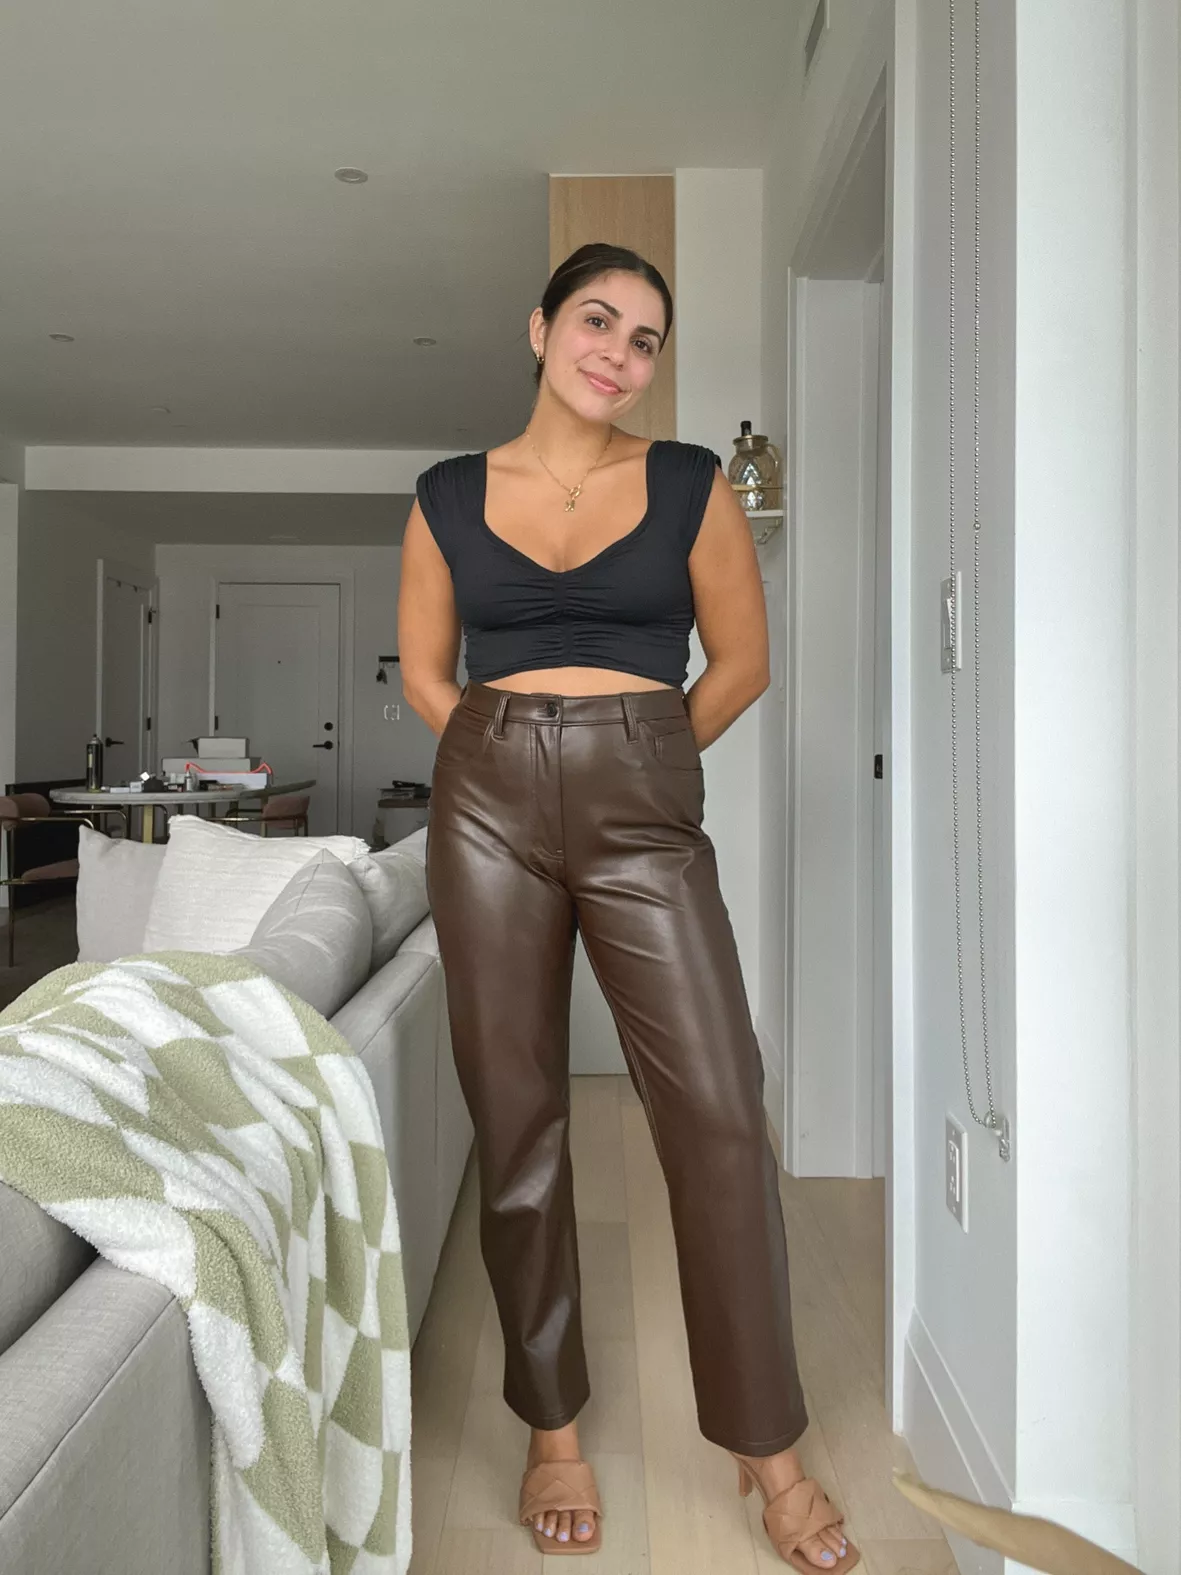 Women's Vegan Leather 90s Straight Pant, Women's Bottoms